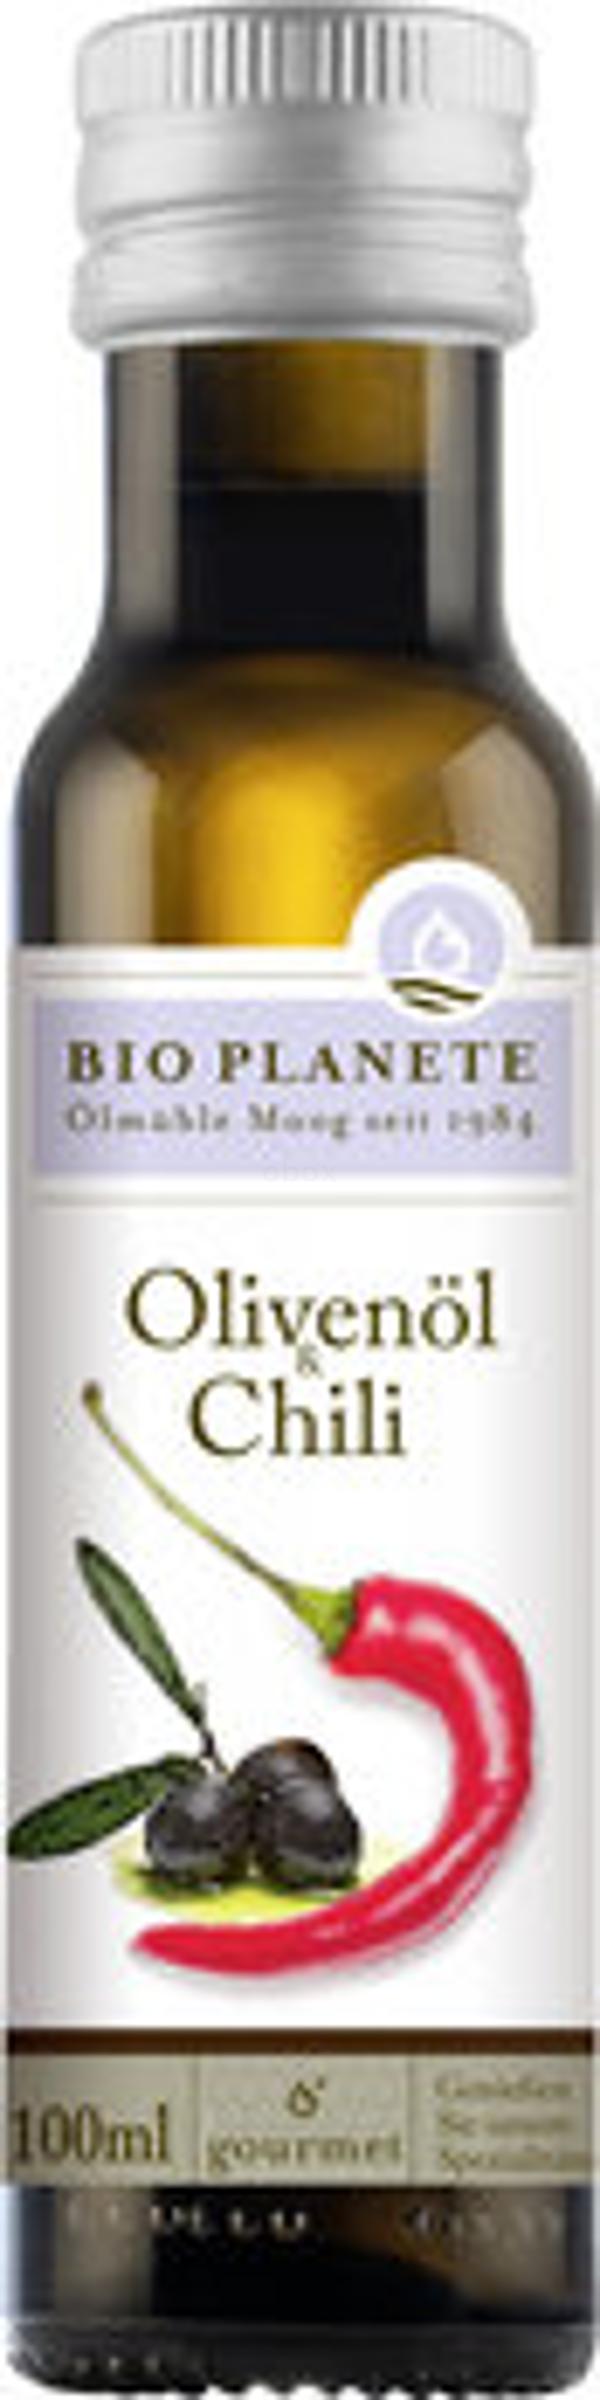 Produktfoto zu Olivenöl & Chili 100ml